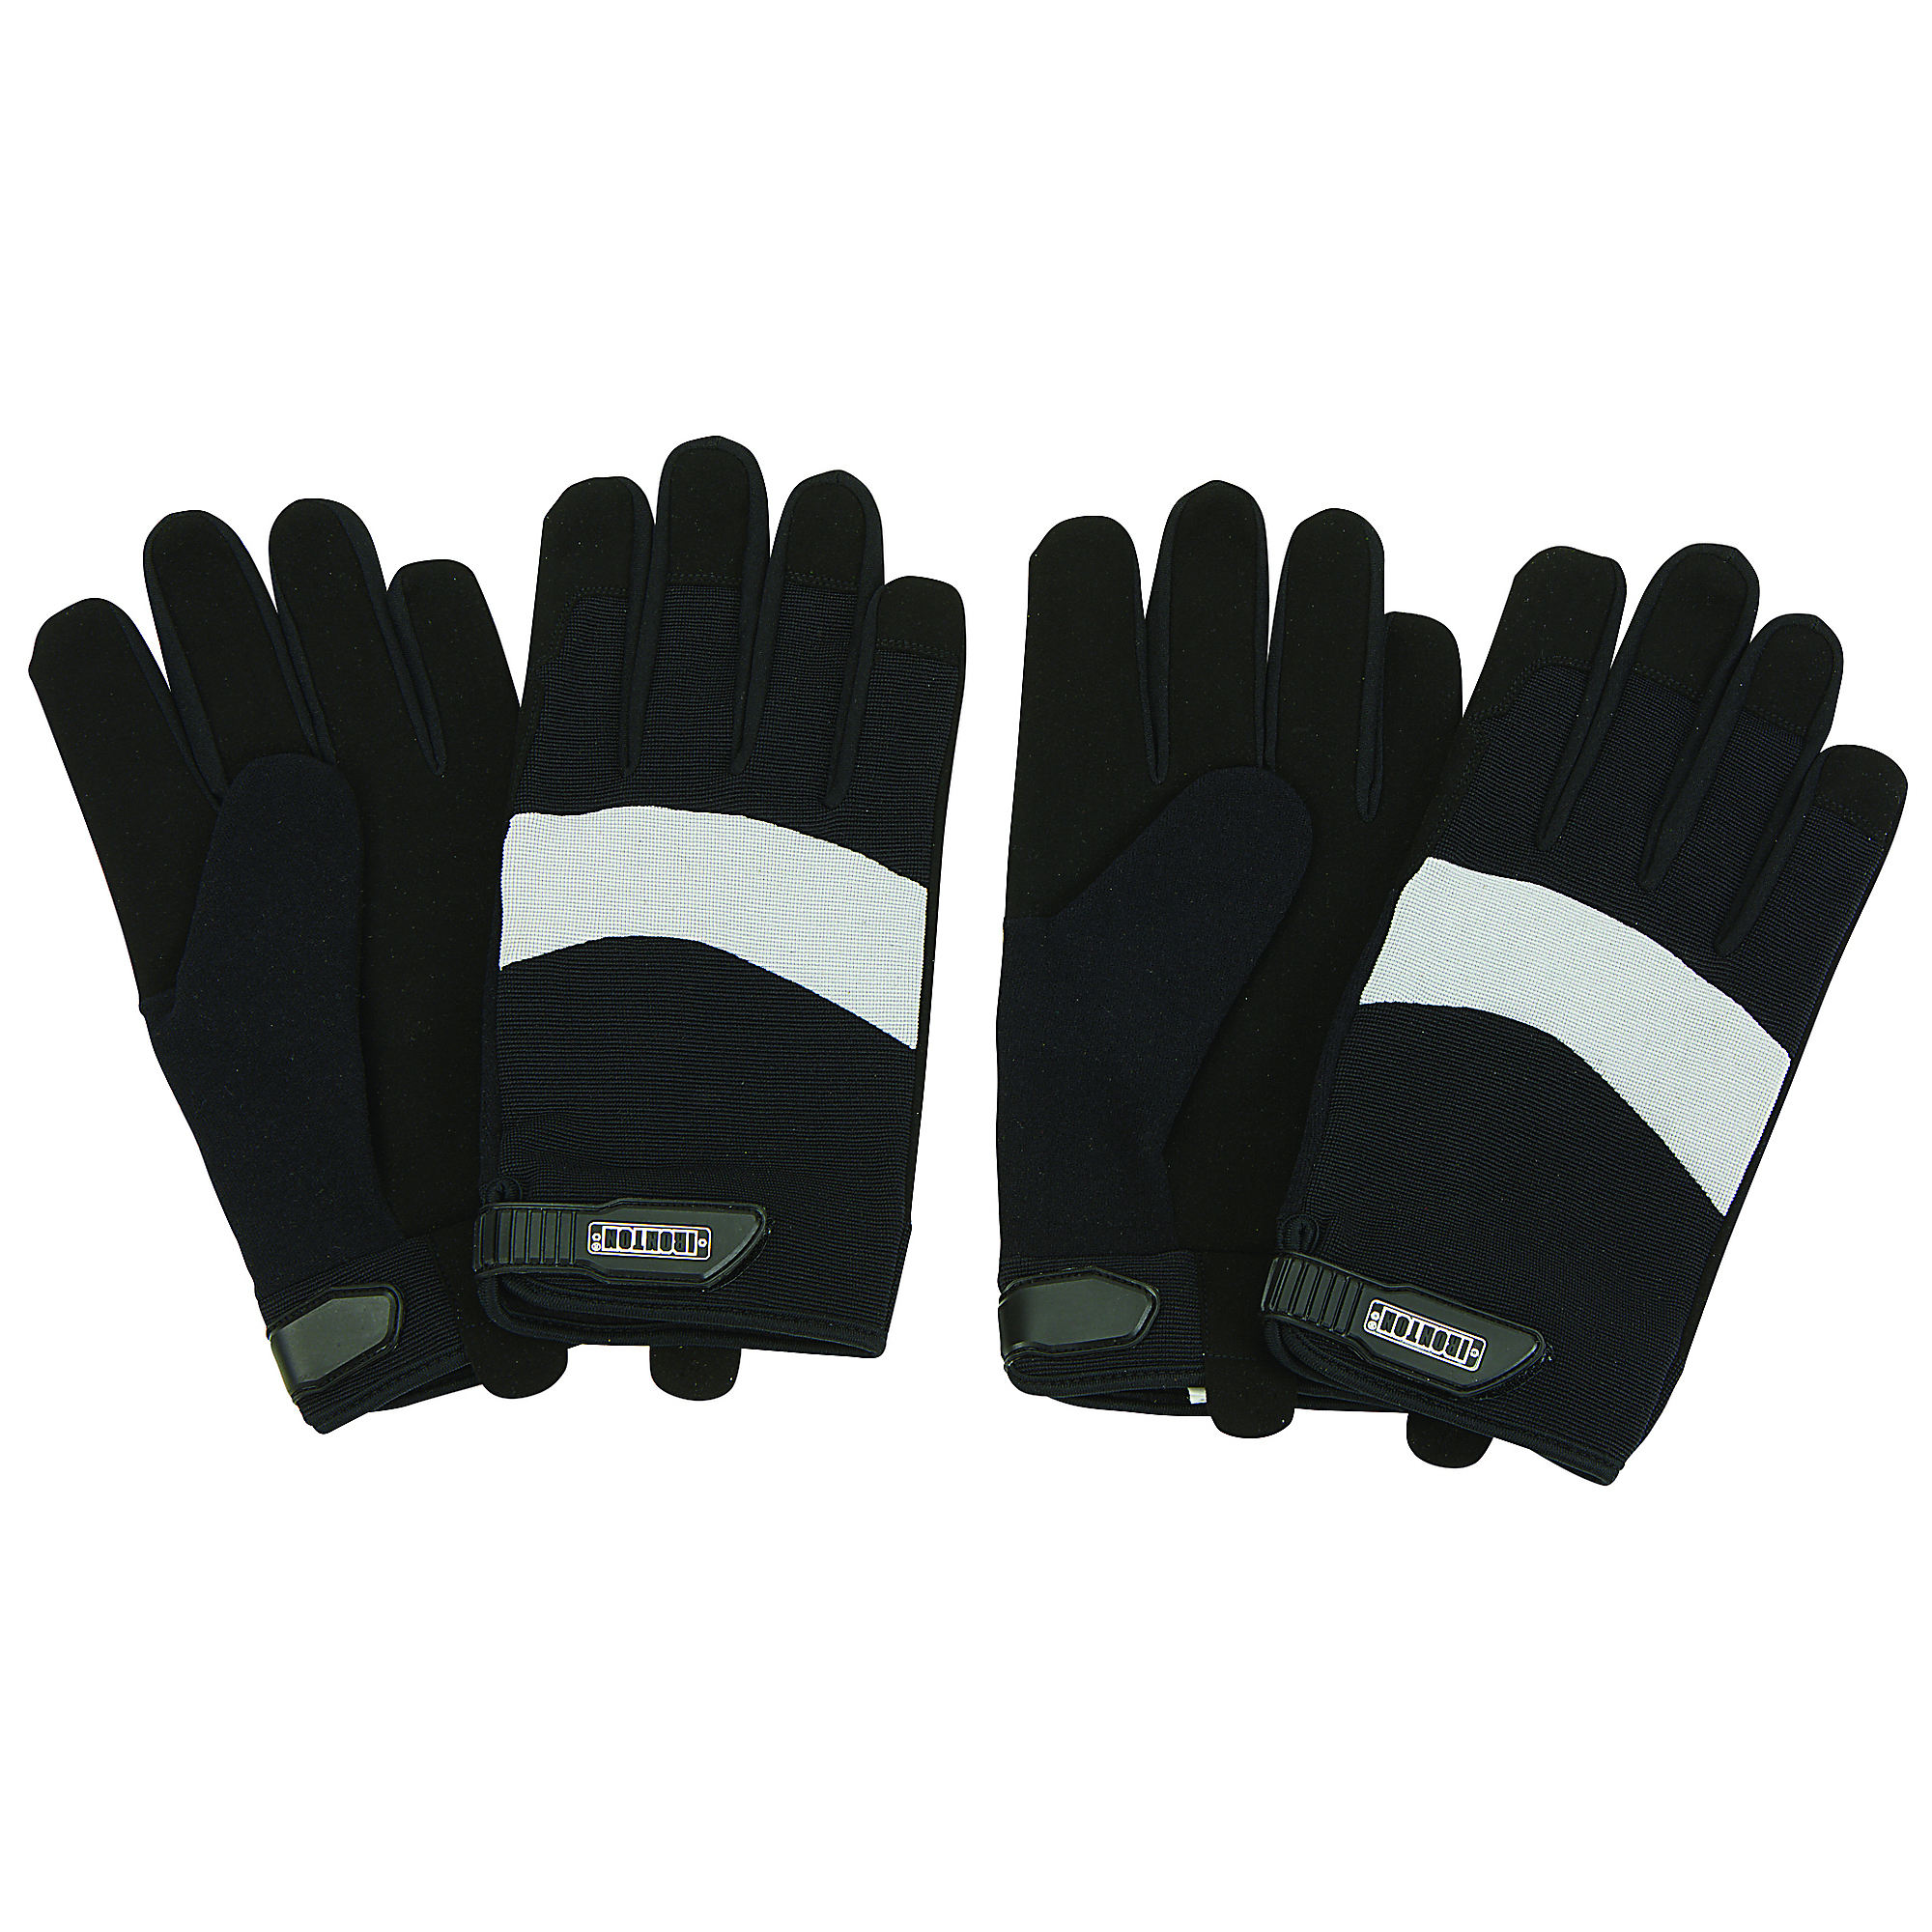 Ironton Men's High-Dexterity General-Purpose Work Gloves, 2 Pairs